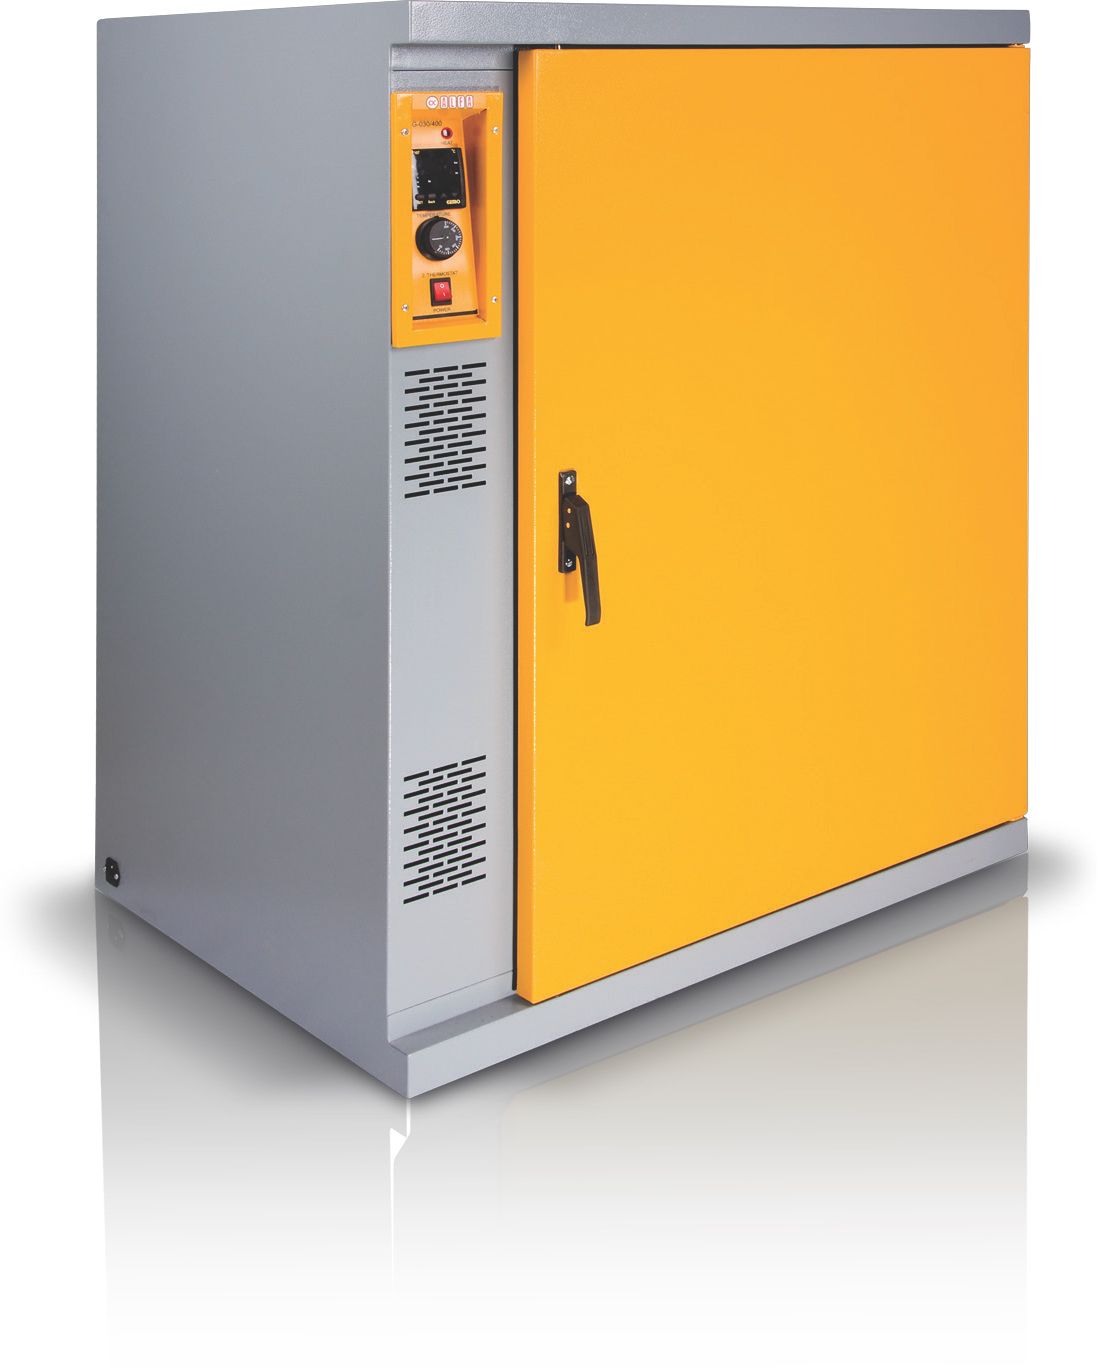 (G-030) Equipment ALFA Oven | – Testing Laboratory